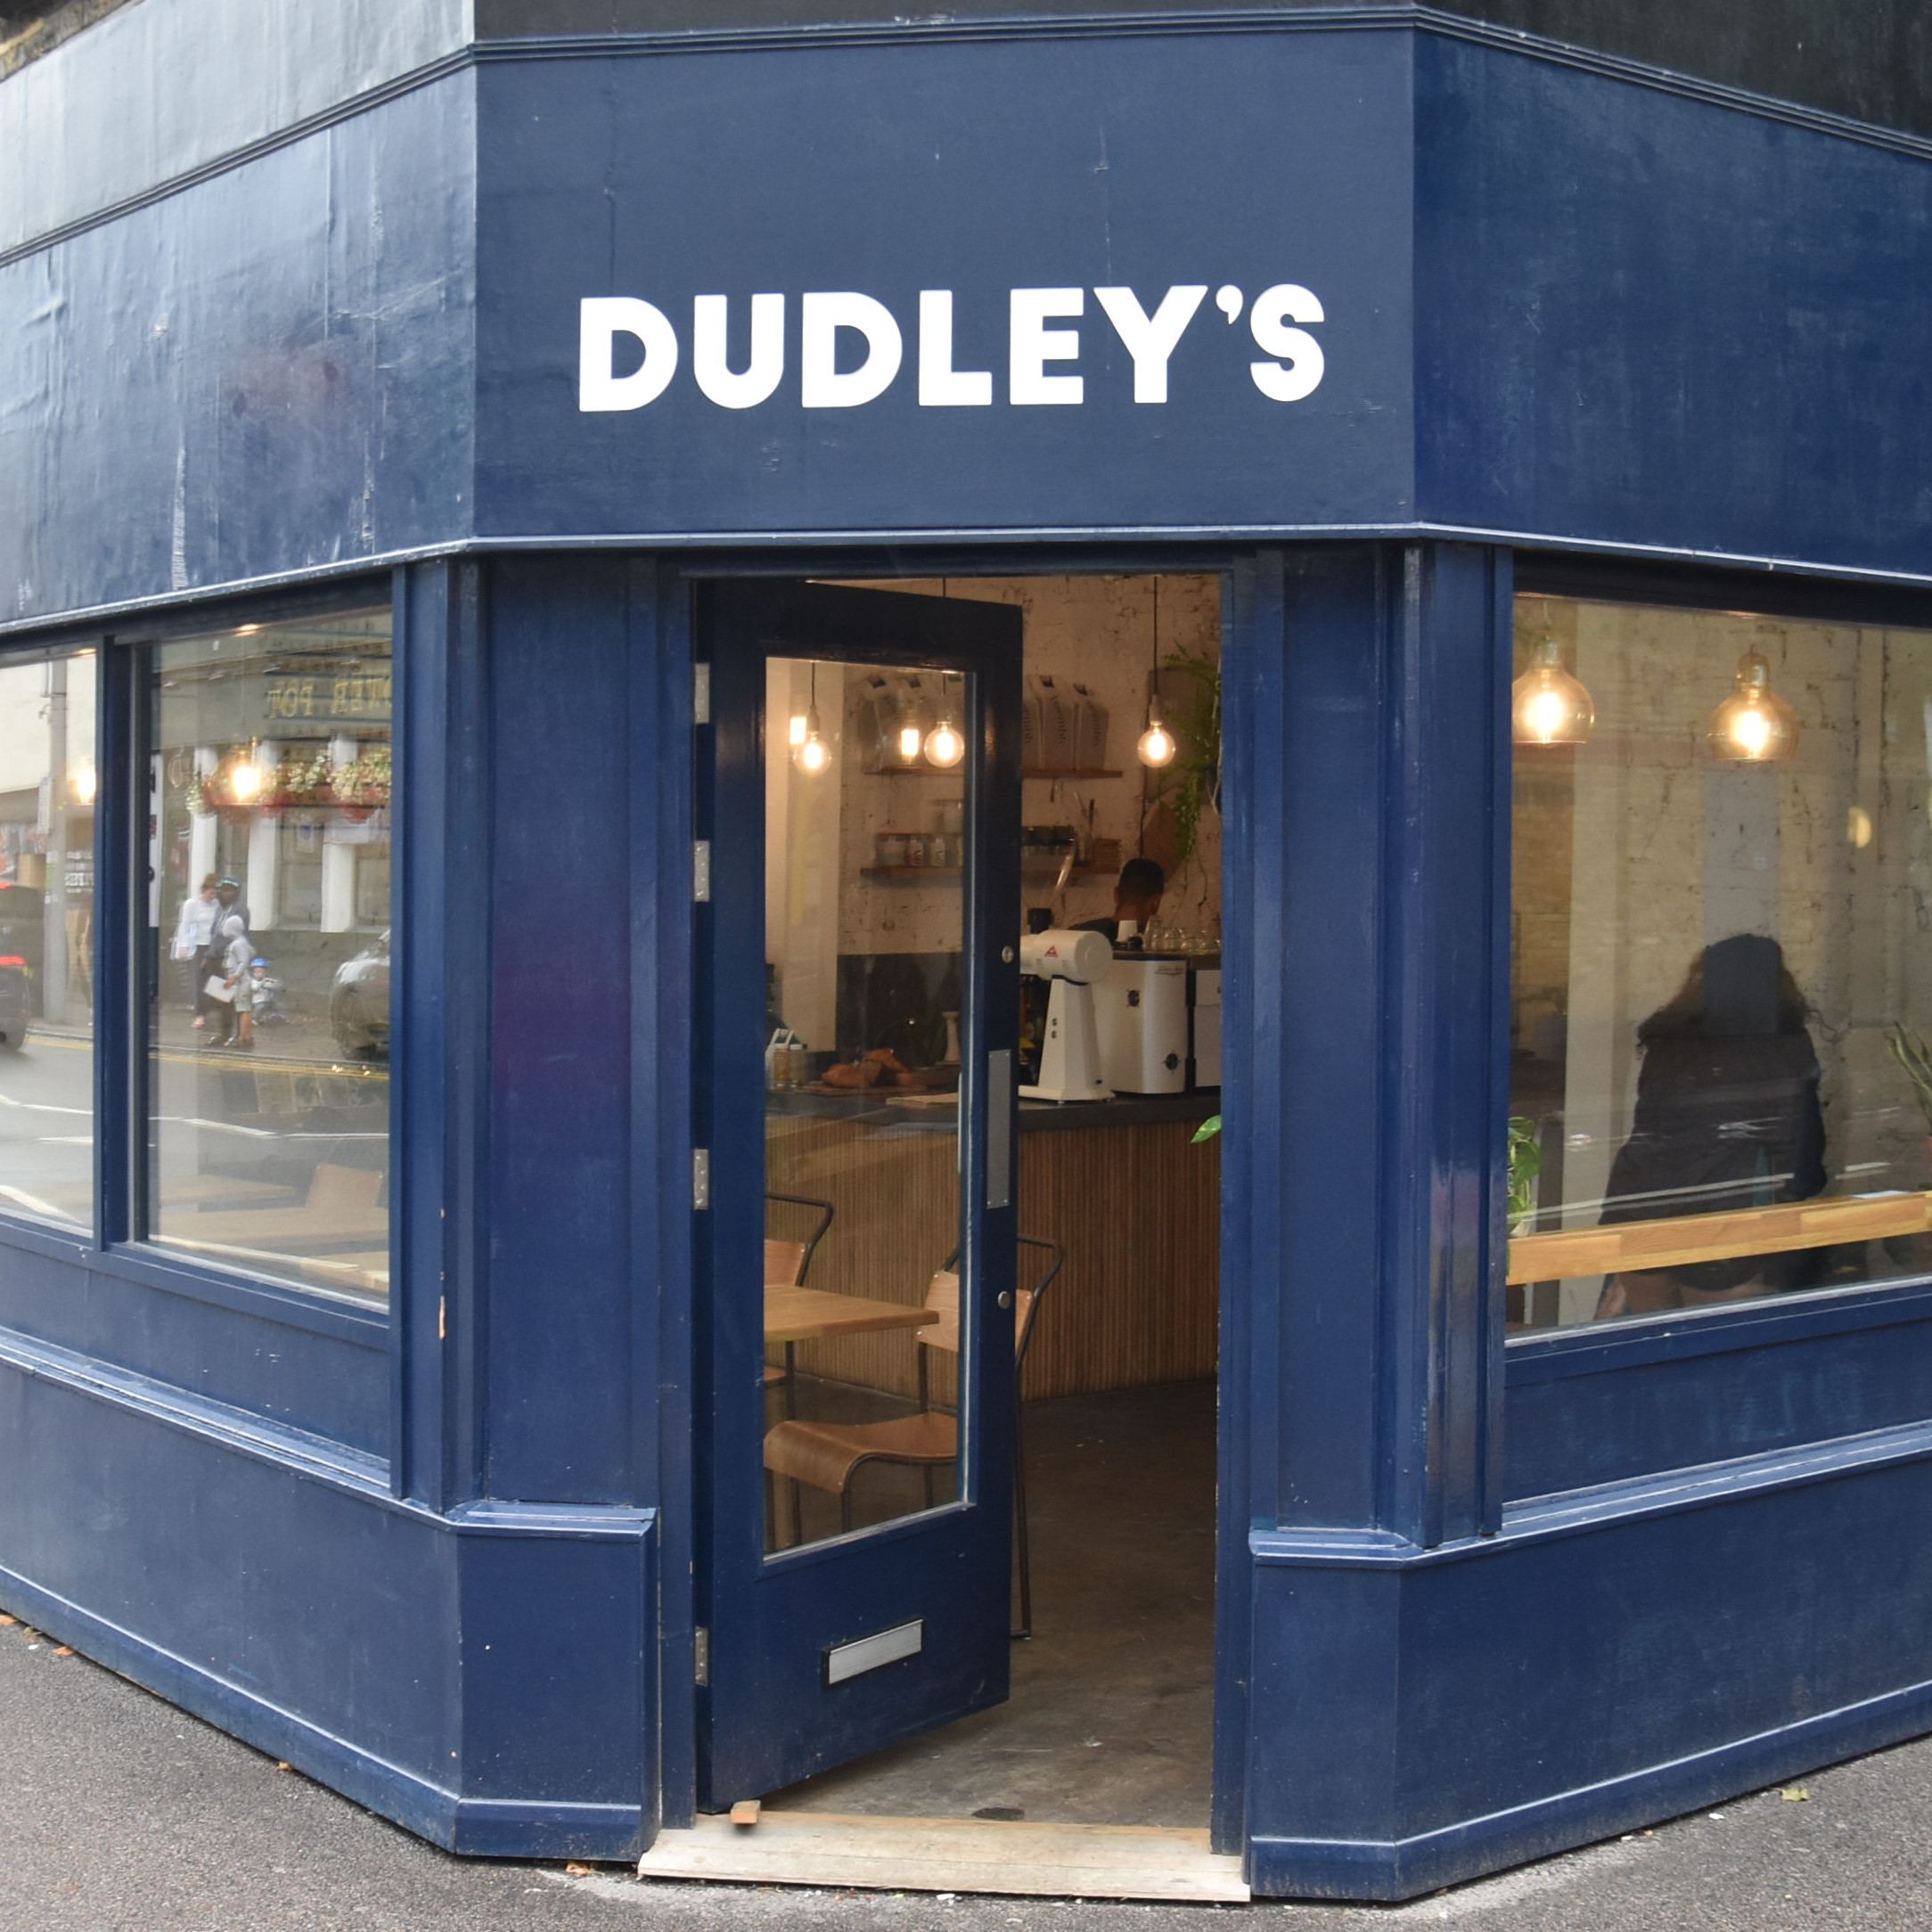 Thumbnail Dudley s (DSC 7907t) Brian #39 s Coffee Spot